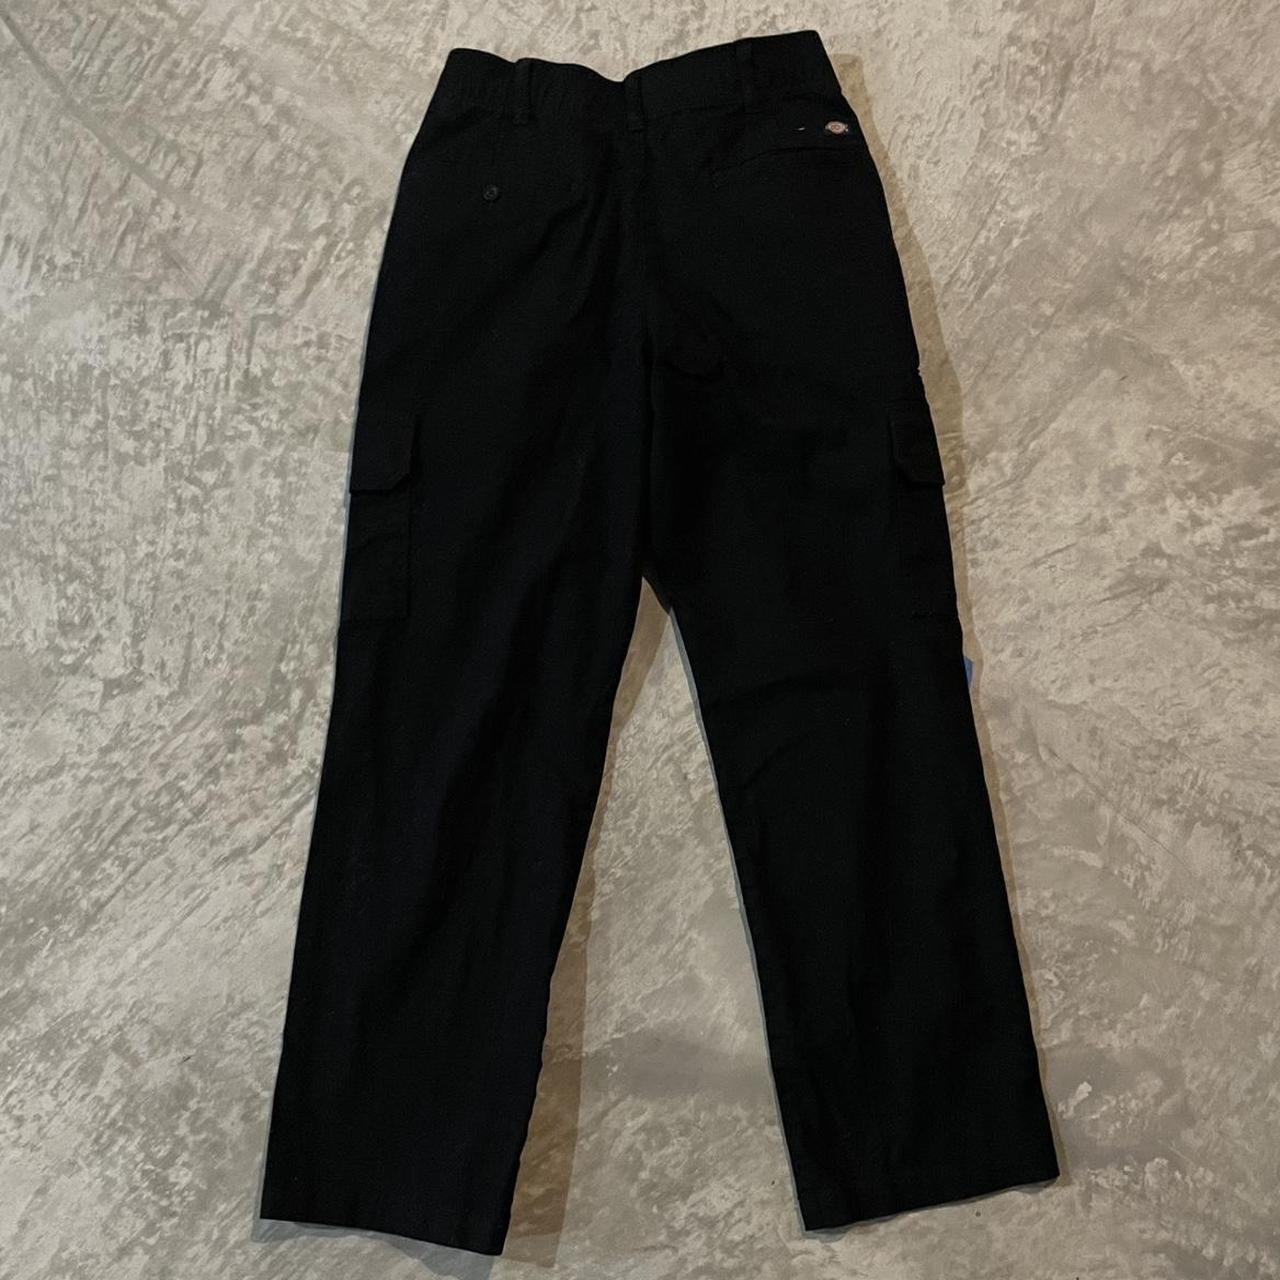 German Army style BDU cargo pants black durable combat uniform classic  trousers | eBay